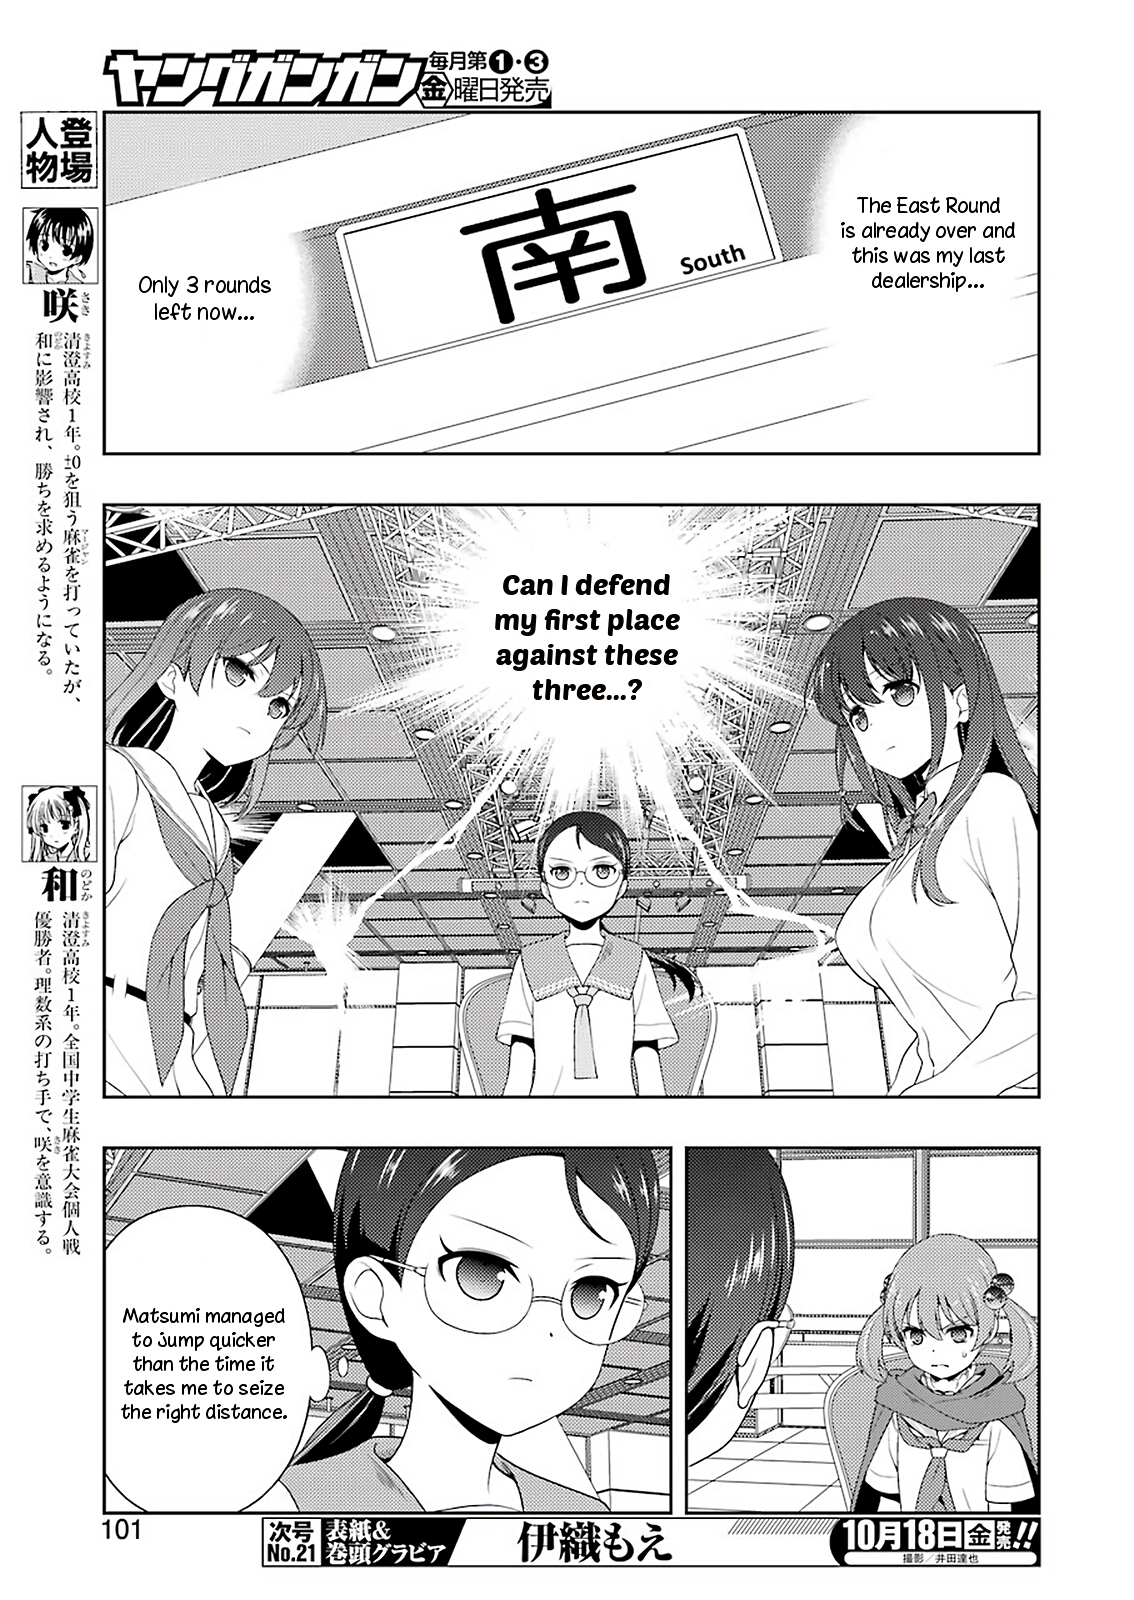 Saki - Page 3